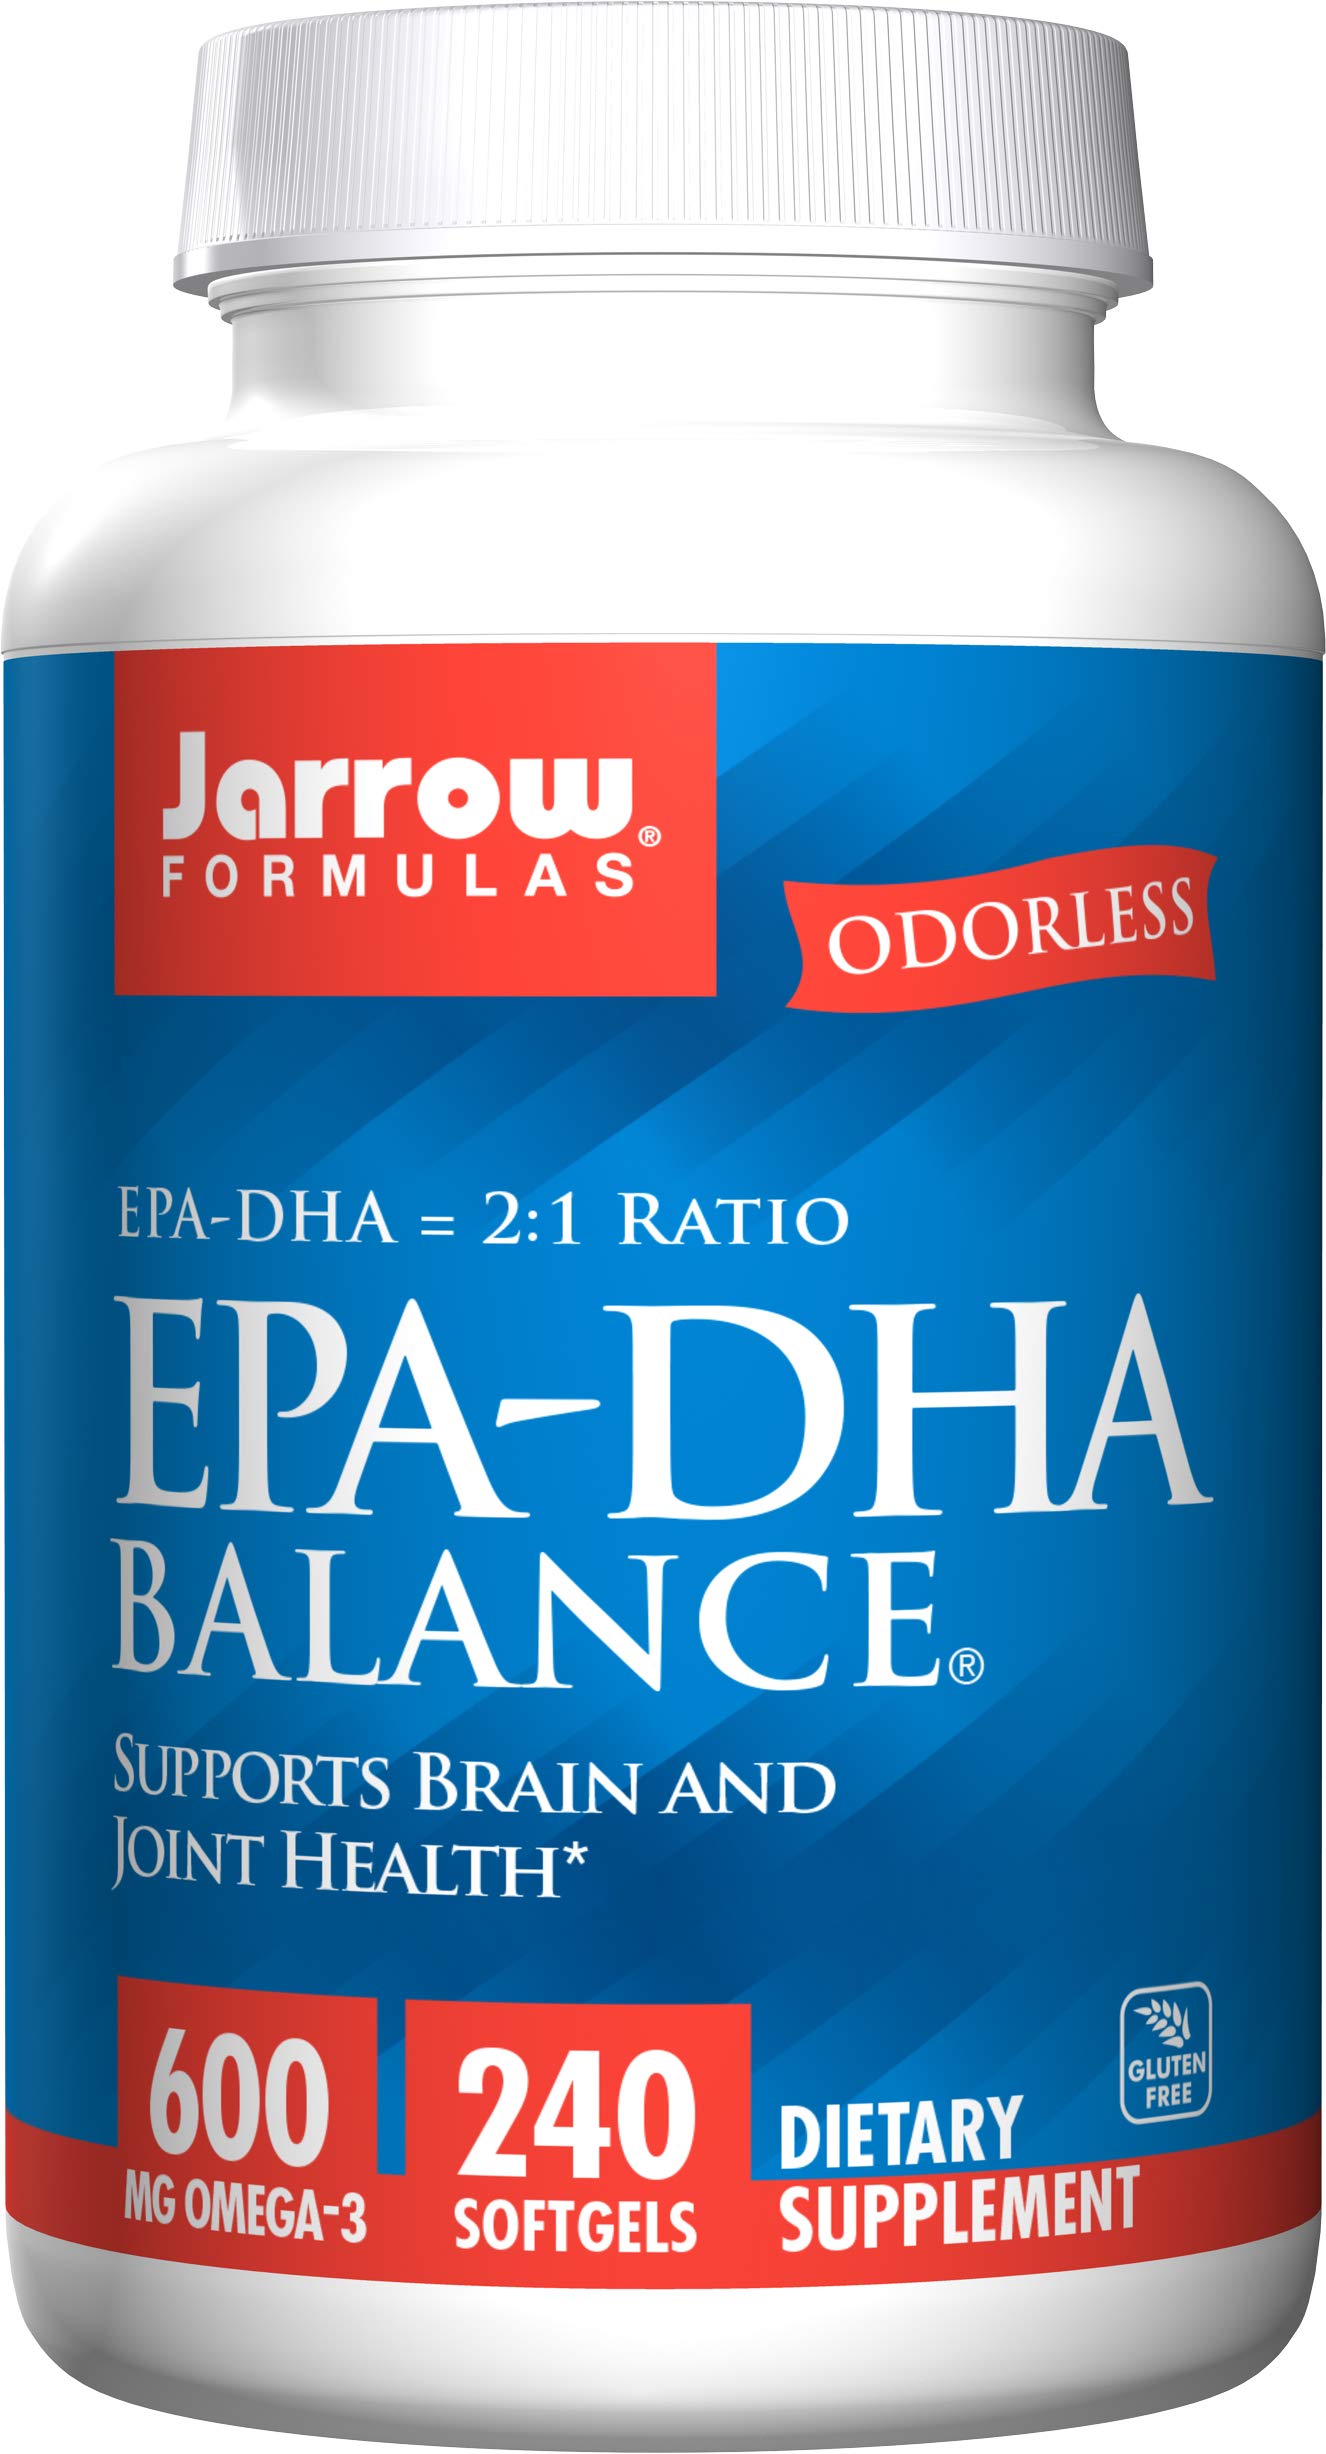 Jarrow Formulas EPA-DHA Balance Odorless Caps, Boosts Brain Function, 240 Softgels